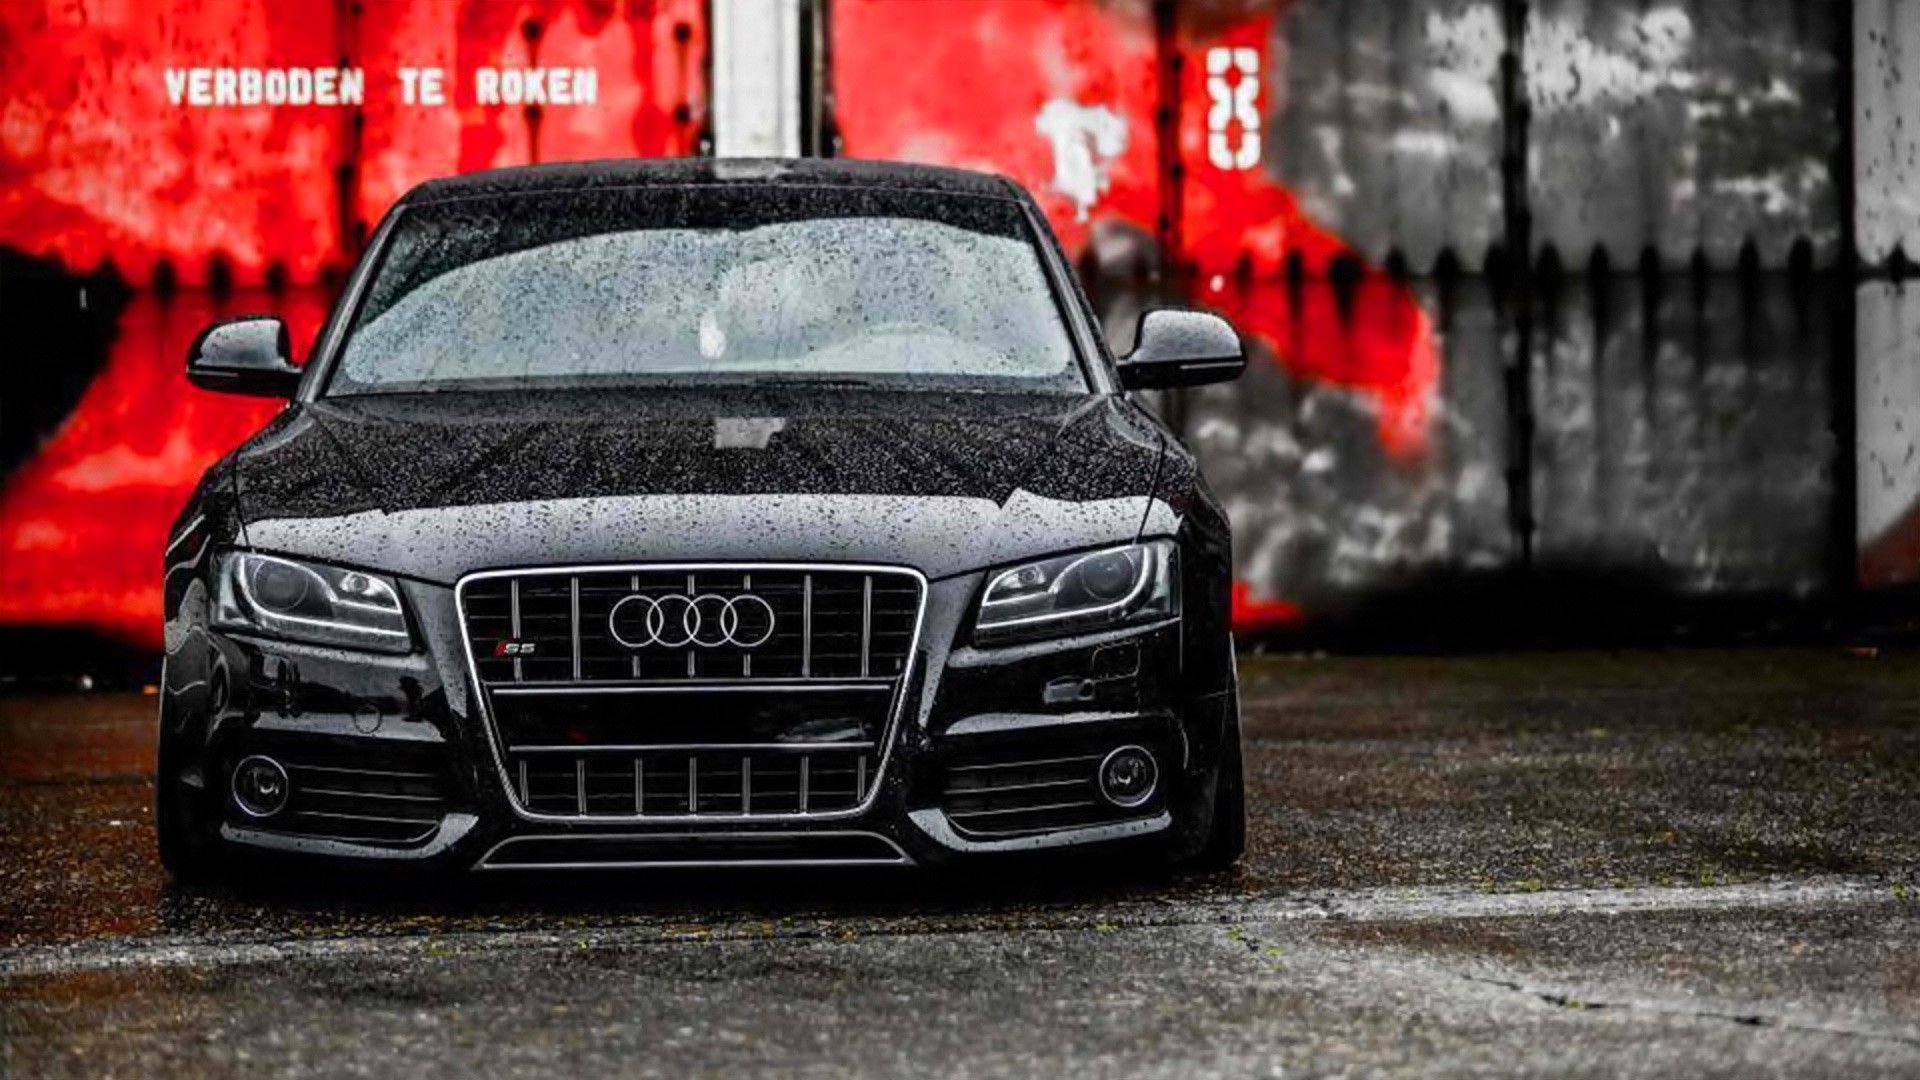 Audi Wallpaper HD (84+ images)